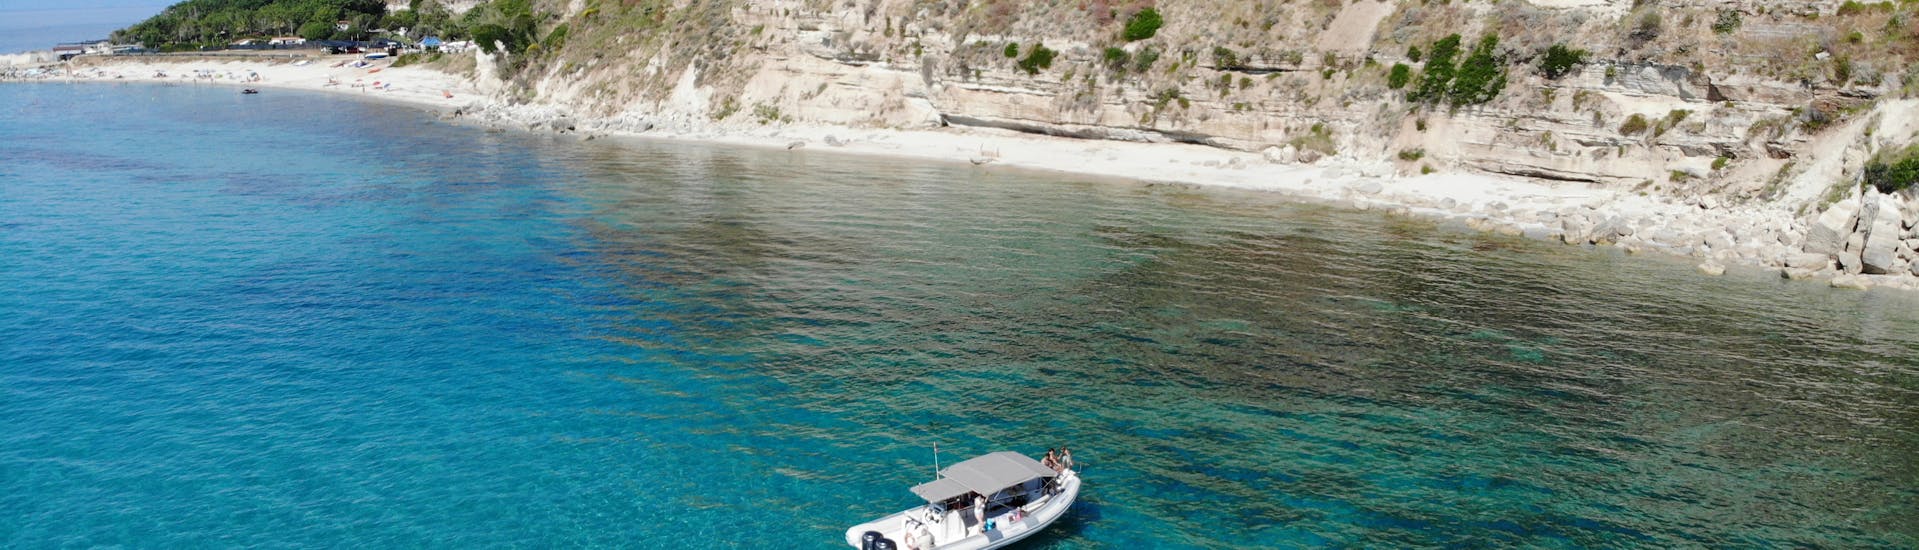 Bateau de TropeaSub vu d'en haut pendant la Balade privée en bateau de Tropea à Capo Vaticano avec Snorkeling.